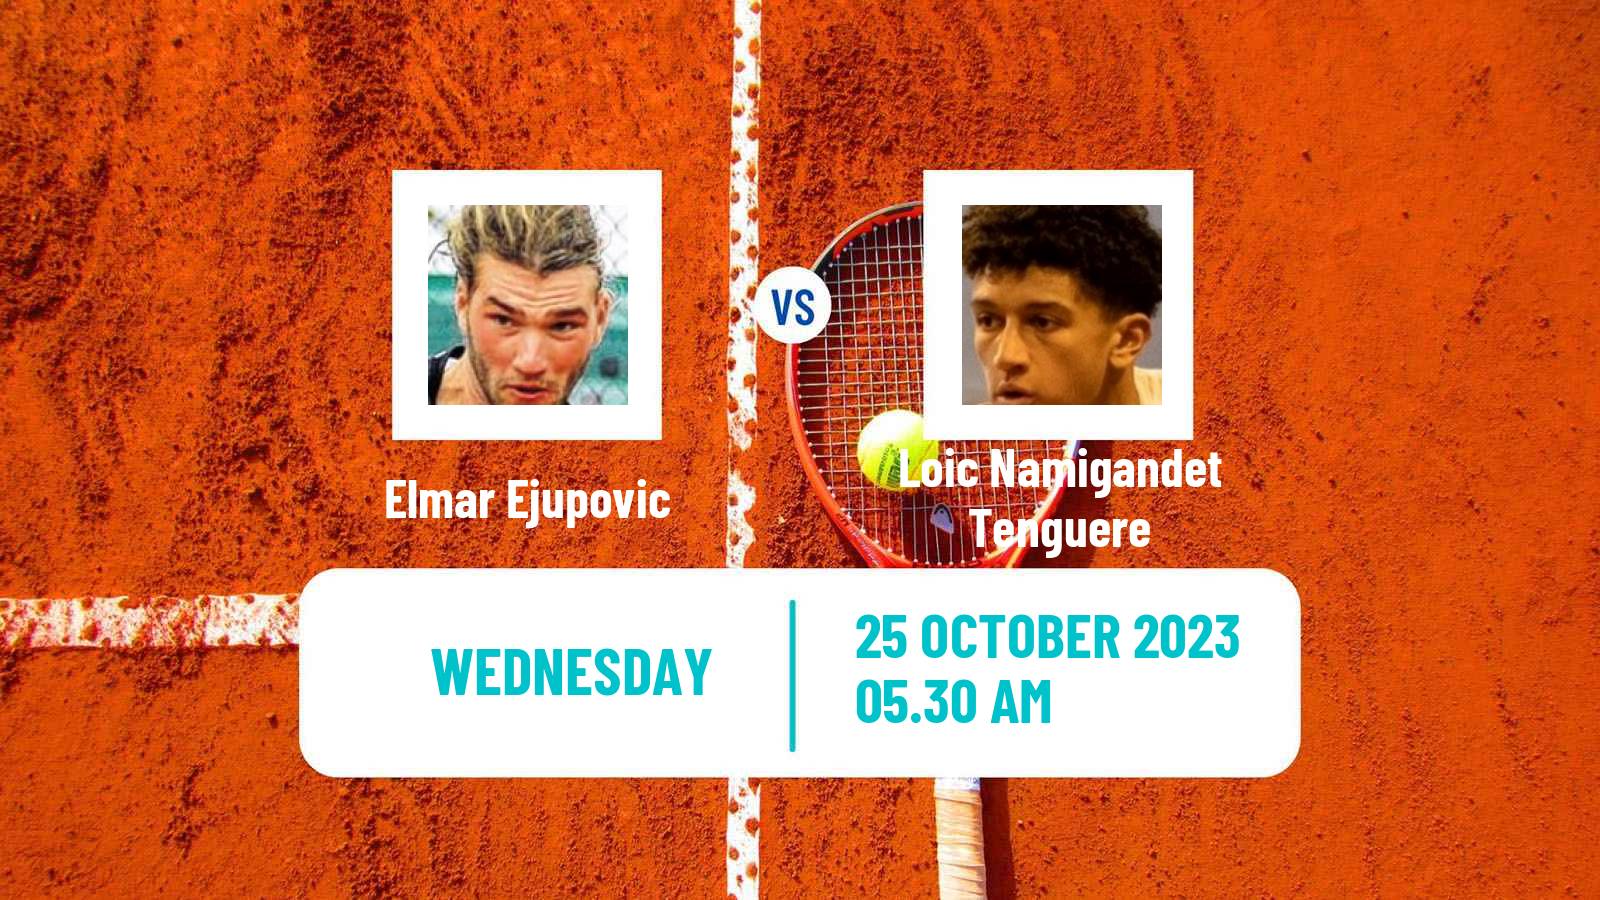 Tennis ITF M25 Sarreguemines Men Elmar Ejupovic - Loic Namigandet Tenguere